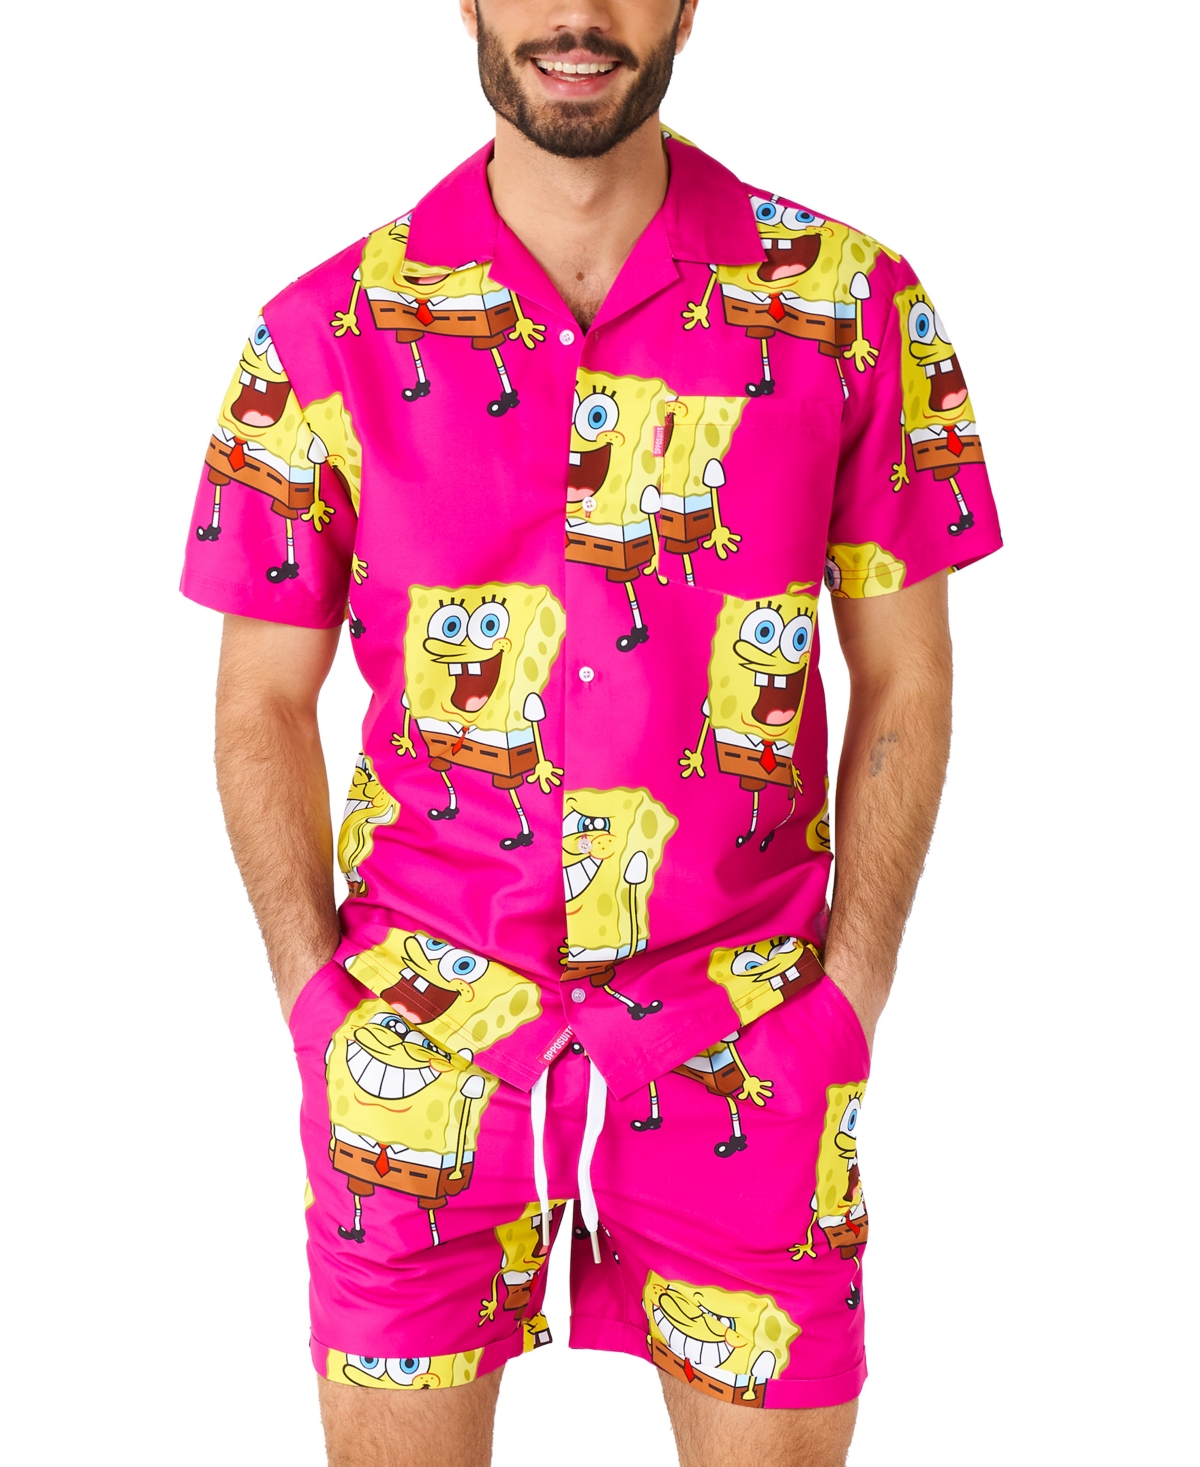 Men's Short-Sleeve SpongeBob Graphic Shirt & Shorts Set - Pink